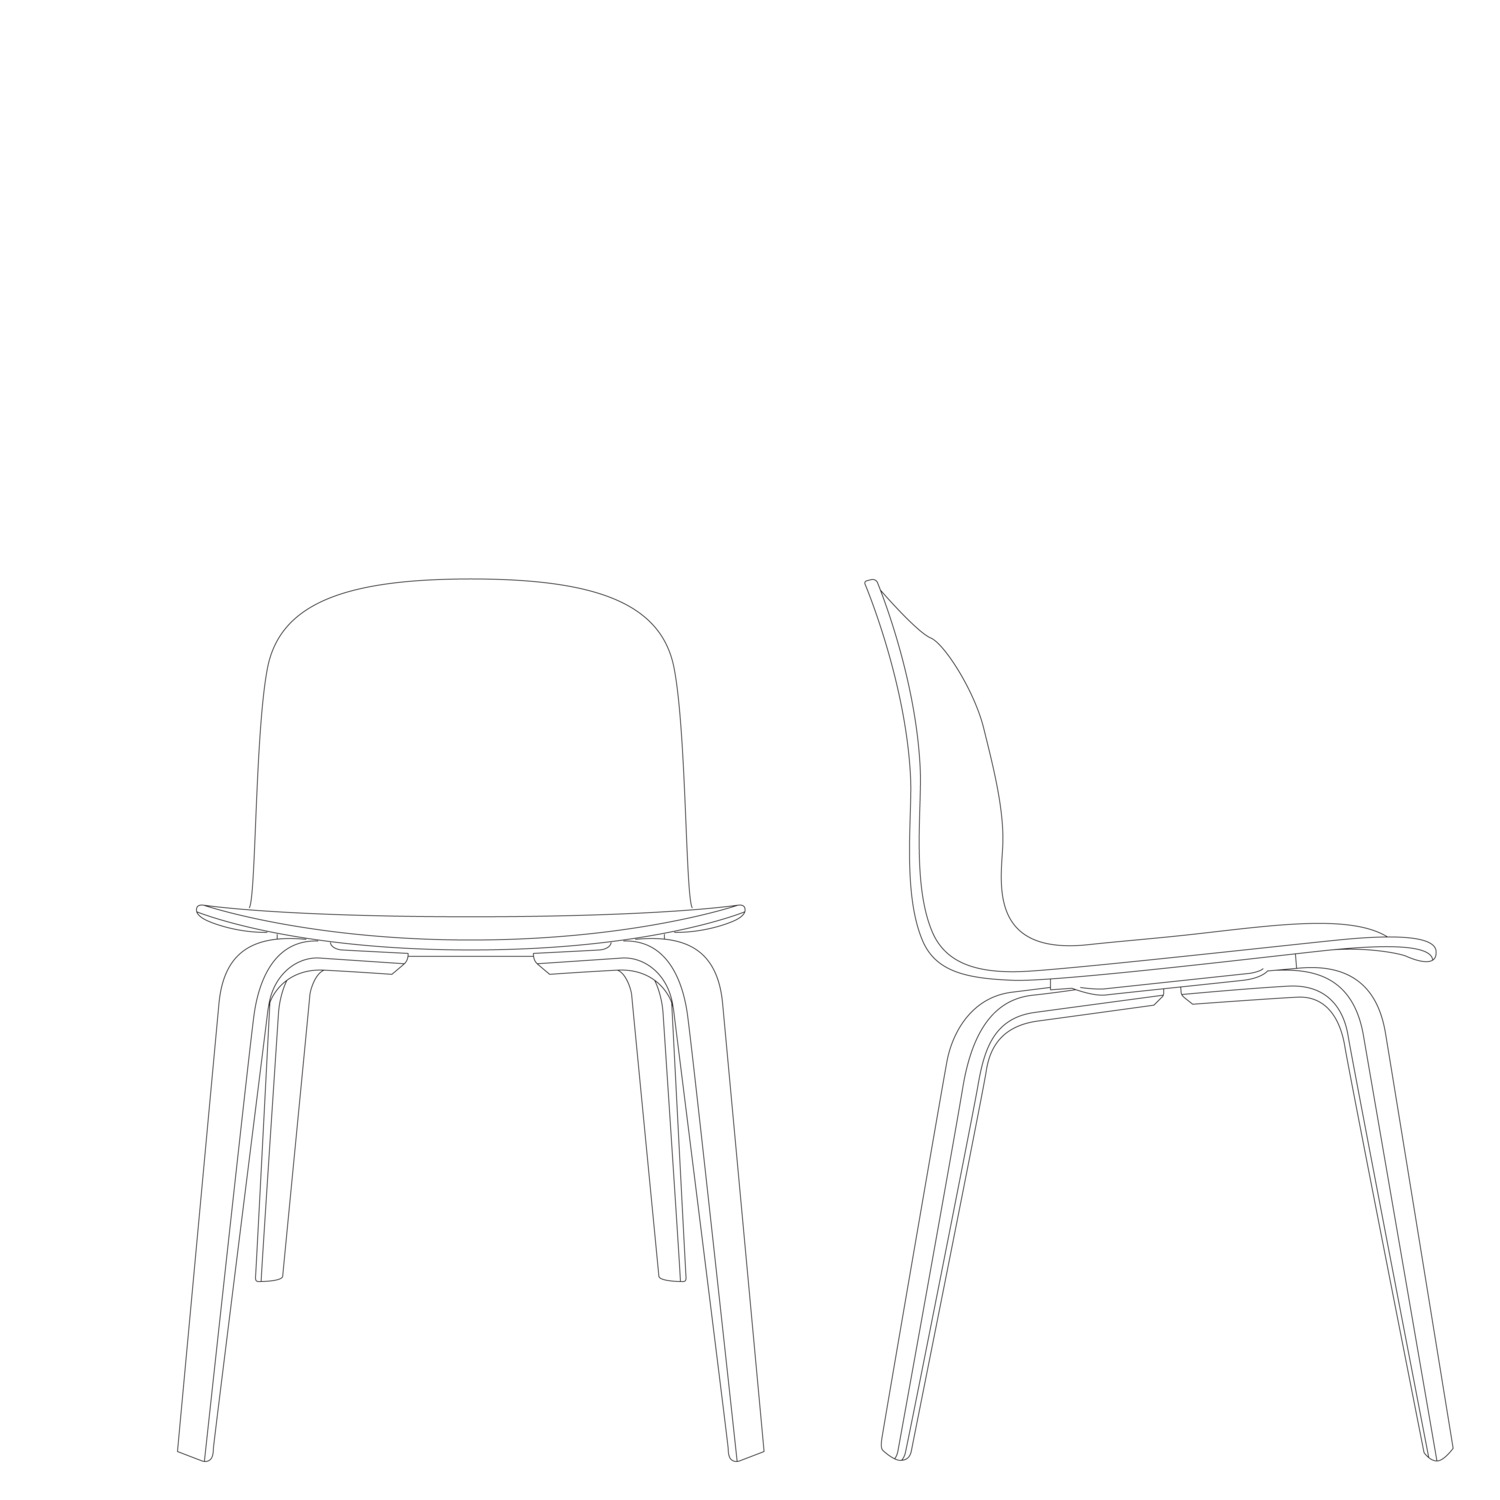 Visu Chair - Wood Base  Ergonomic and functional